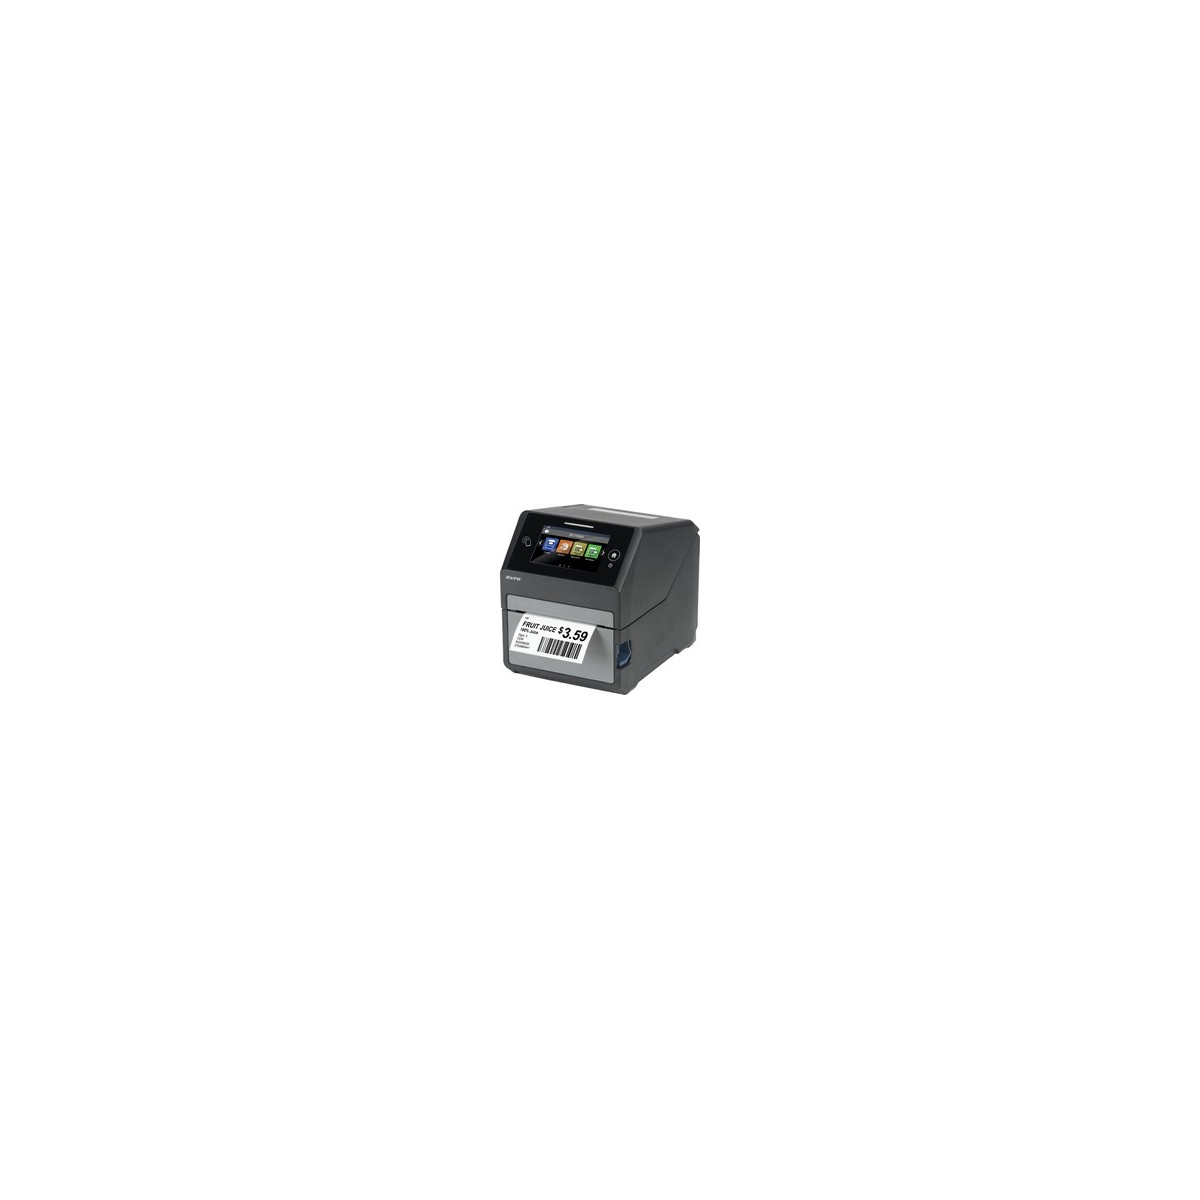 SATO CT408LX TT203 - USBLAN + RS232C - EU-UK - Direct thermal - Thermal transfer - POS printer - 203 x 203 DPI - 8 ips - 0.08 - 